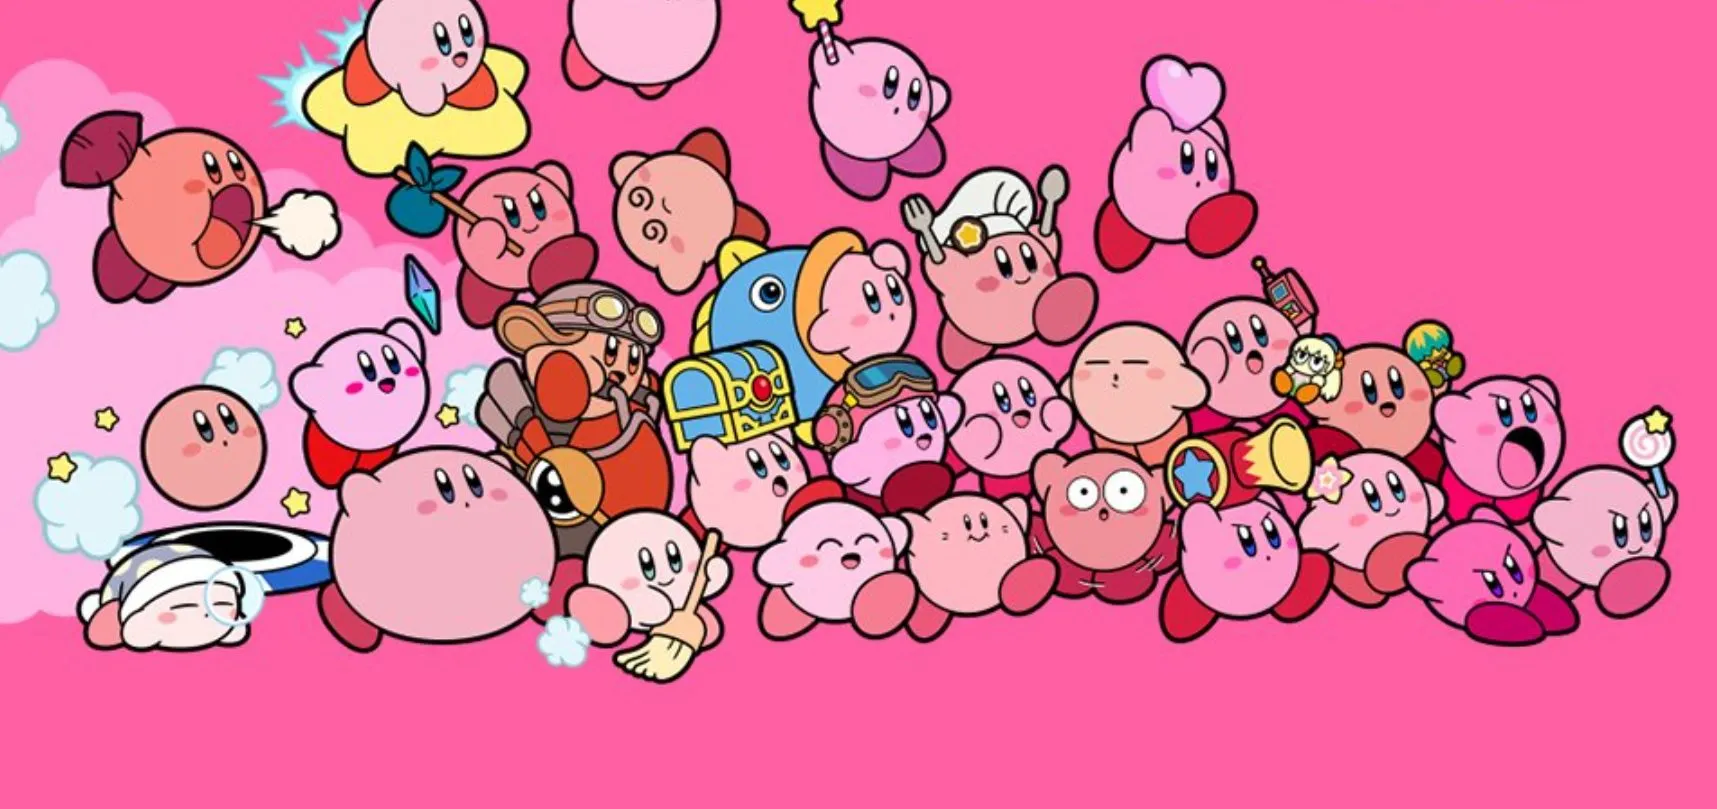 Kirby 30th anniversary news coming soon, teases Nintendo